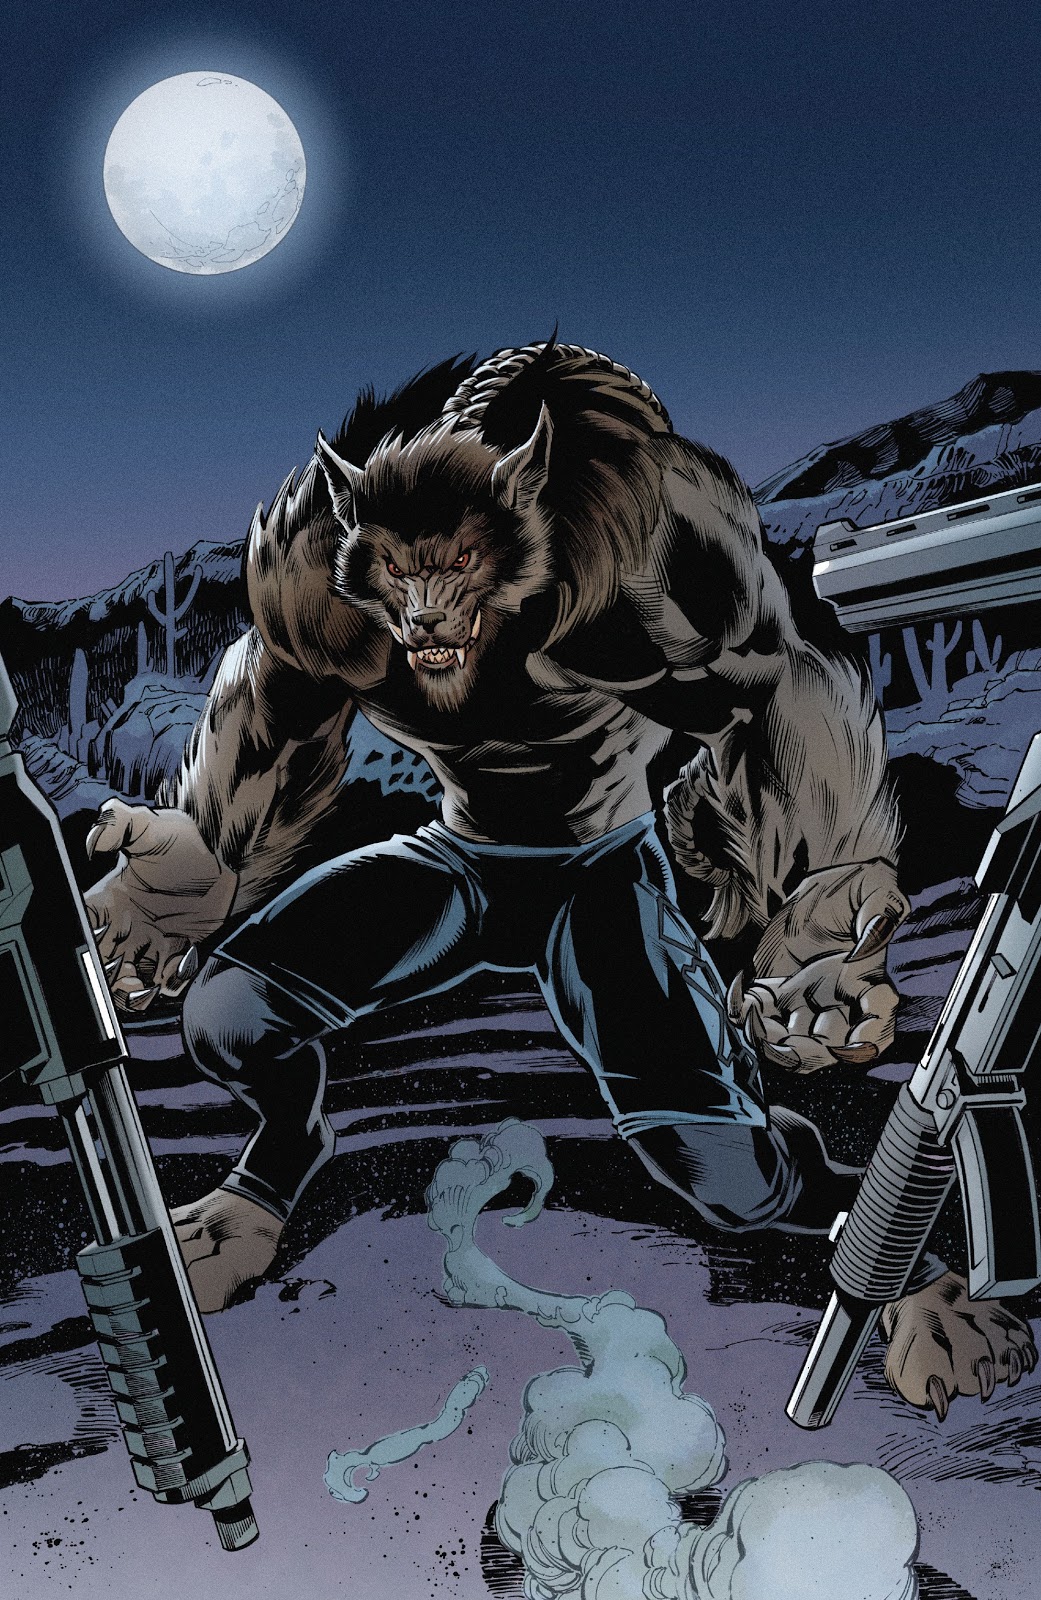 werewolf by night marvel comics